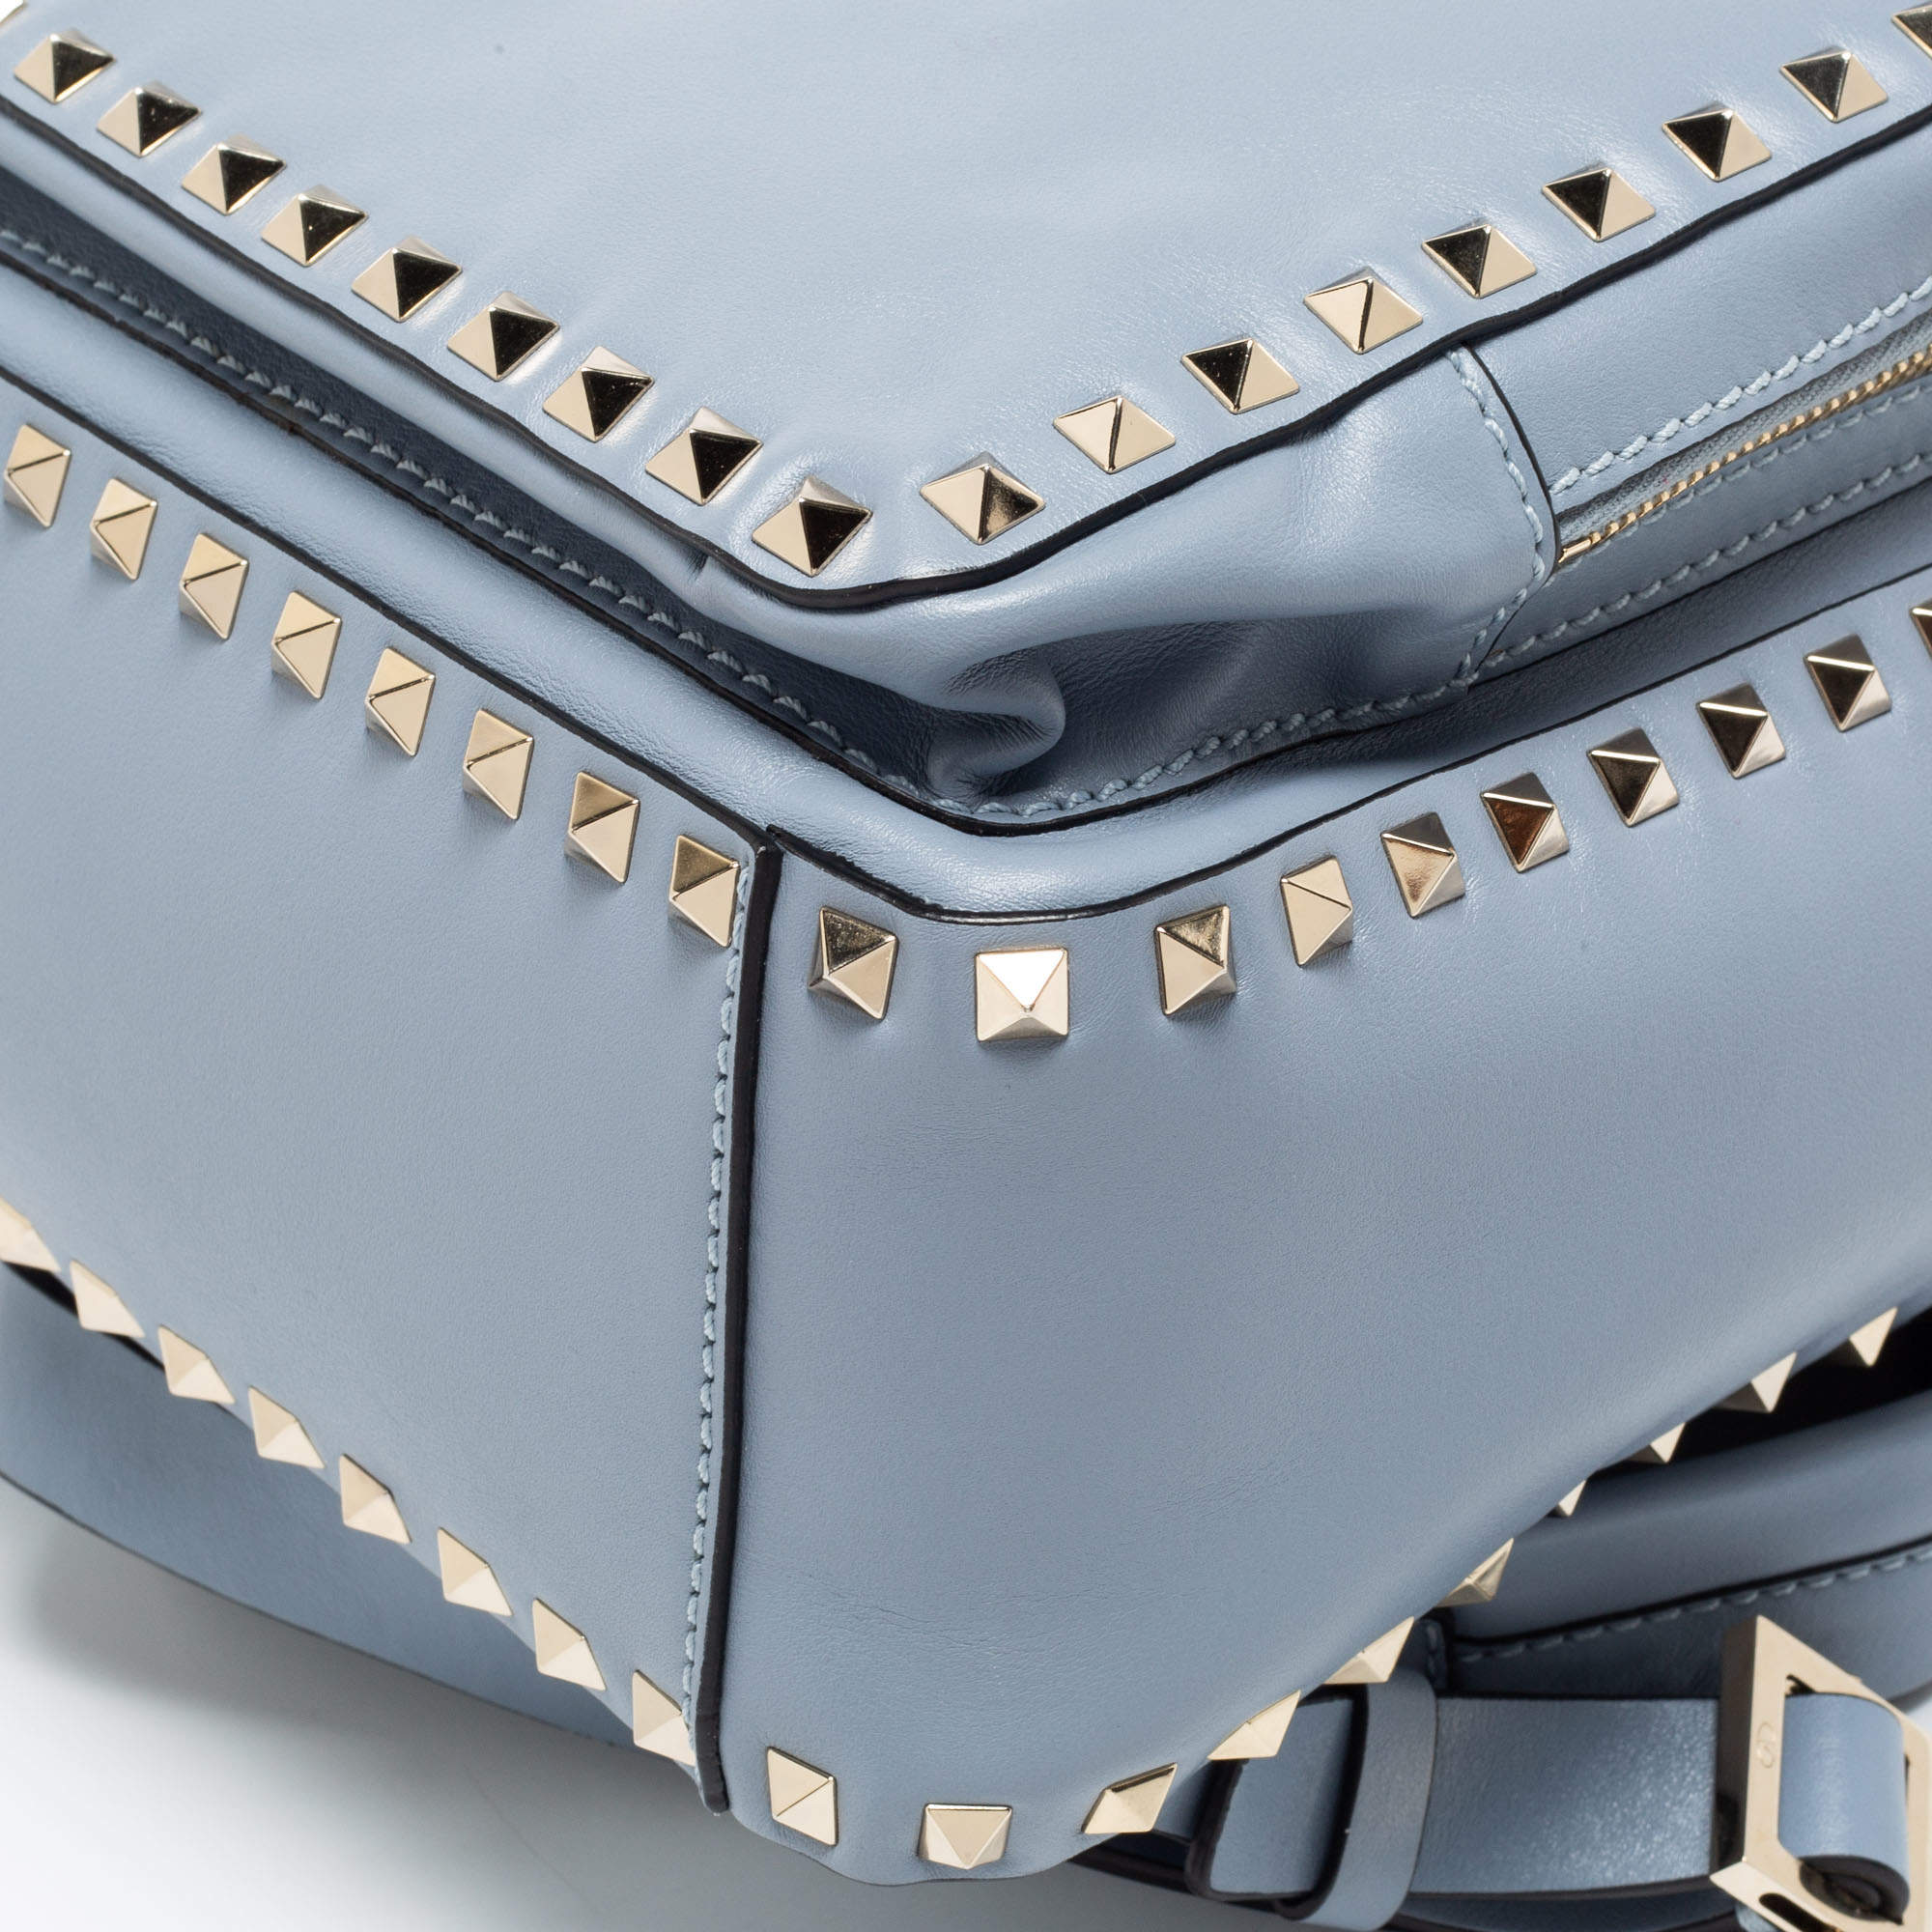 Rockstud leather backpack Valentino Garavani Blue in Leather - 19395673